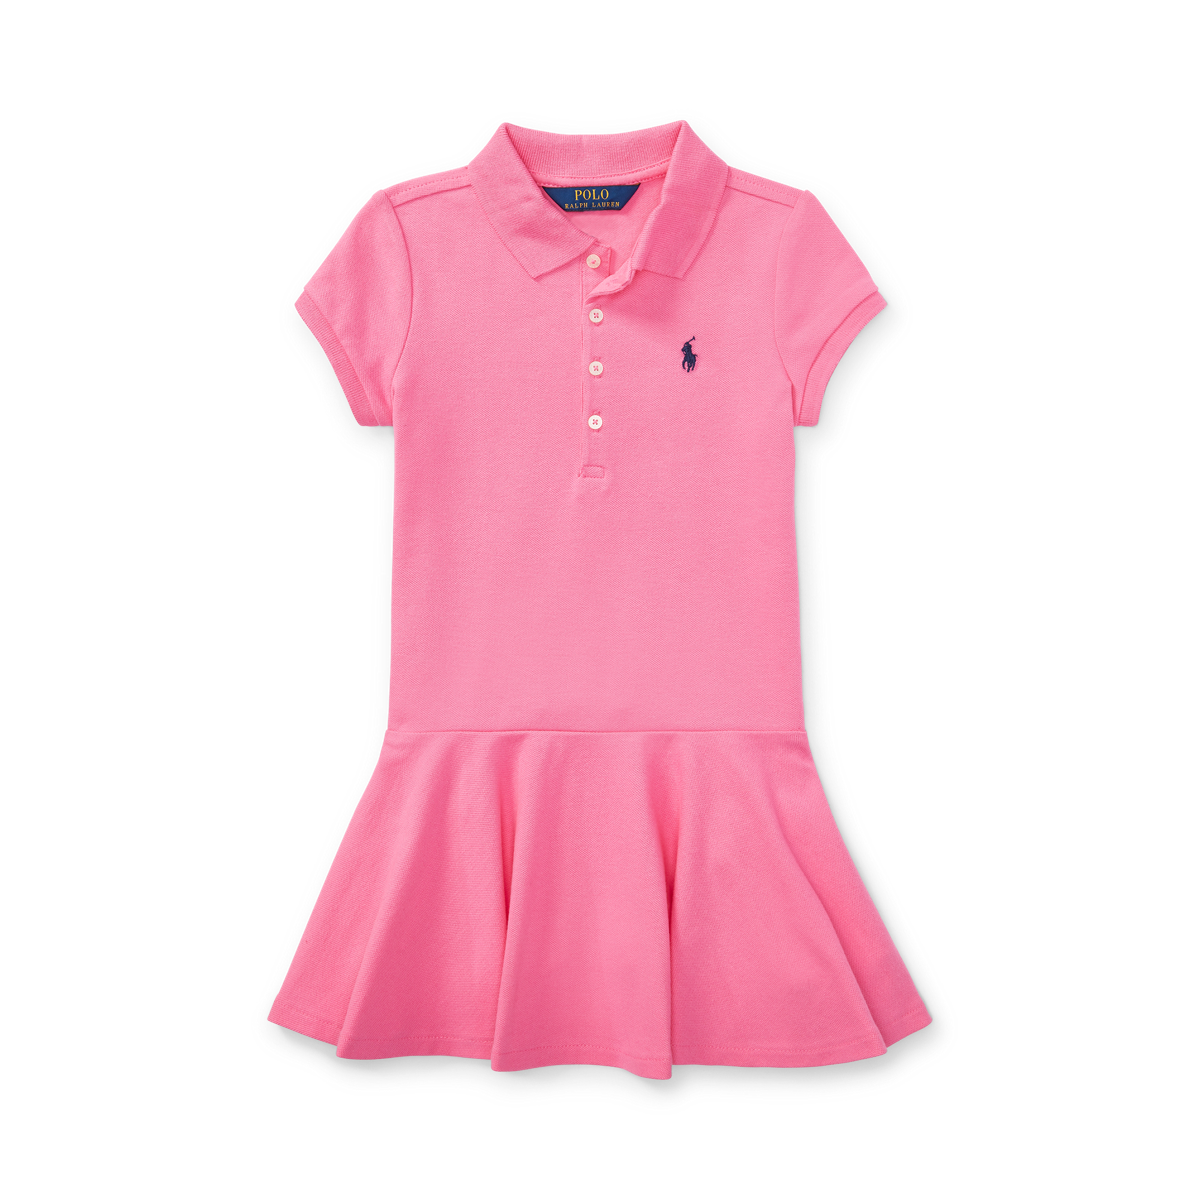 Ralph Lauren Women's Cotton Mesh Polo Dress - Size S in Pink